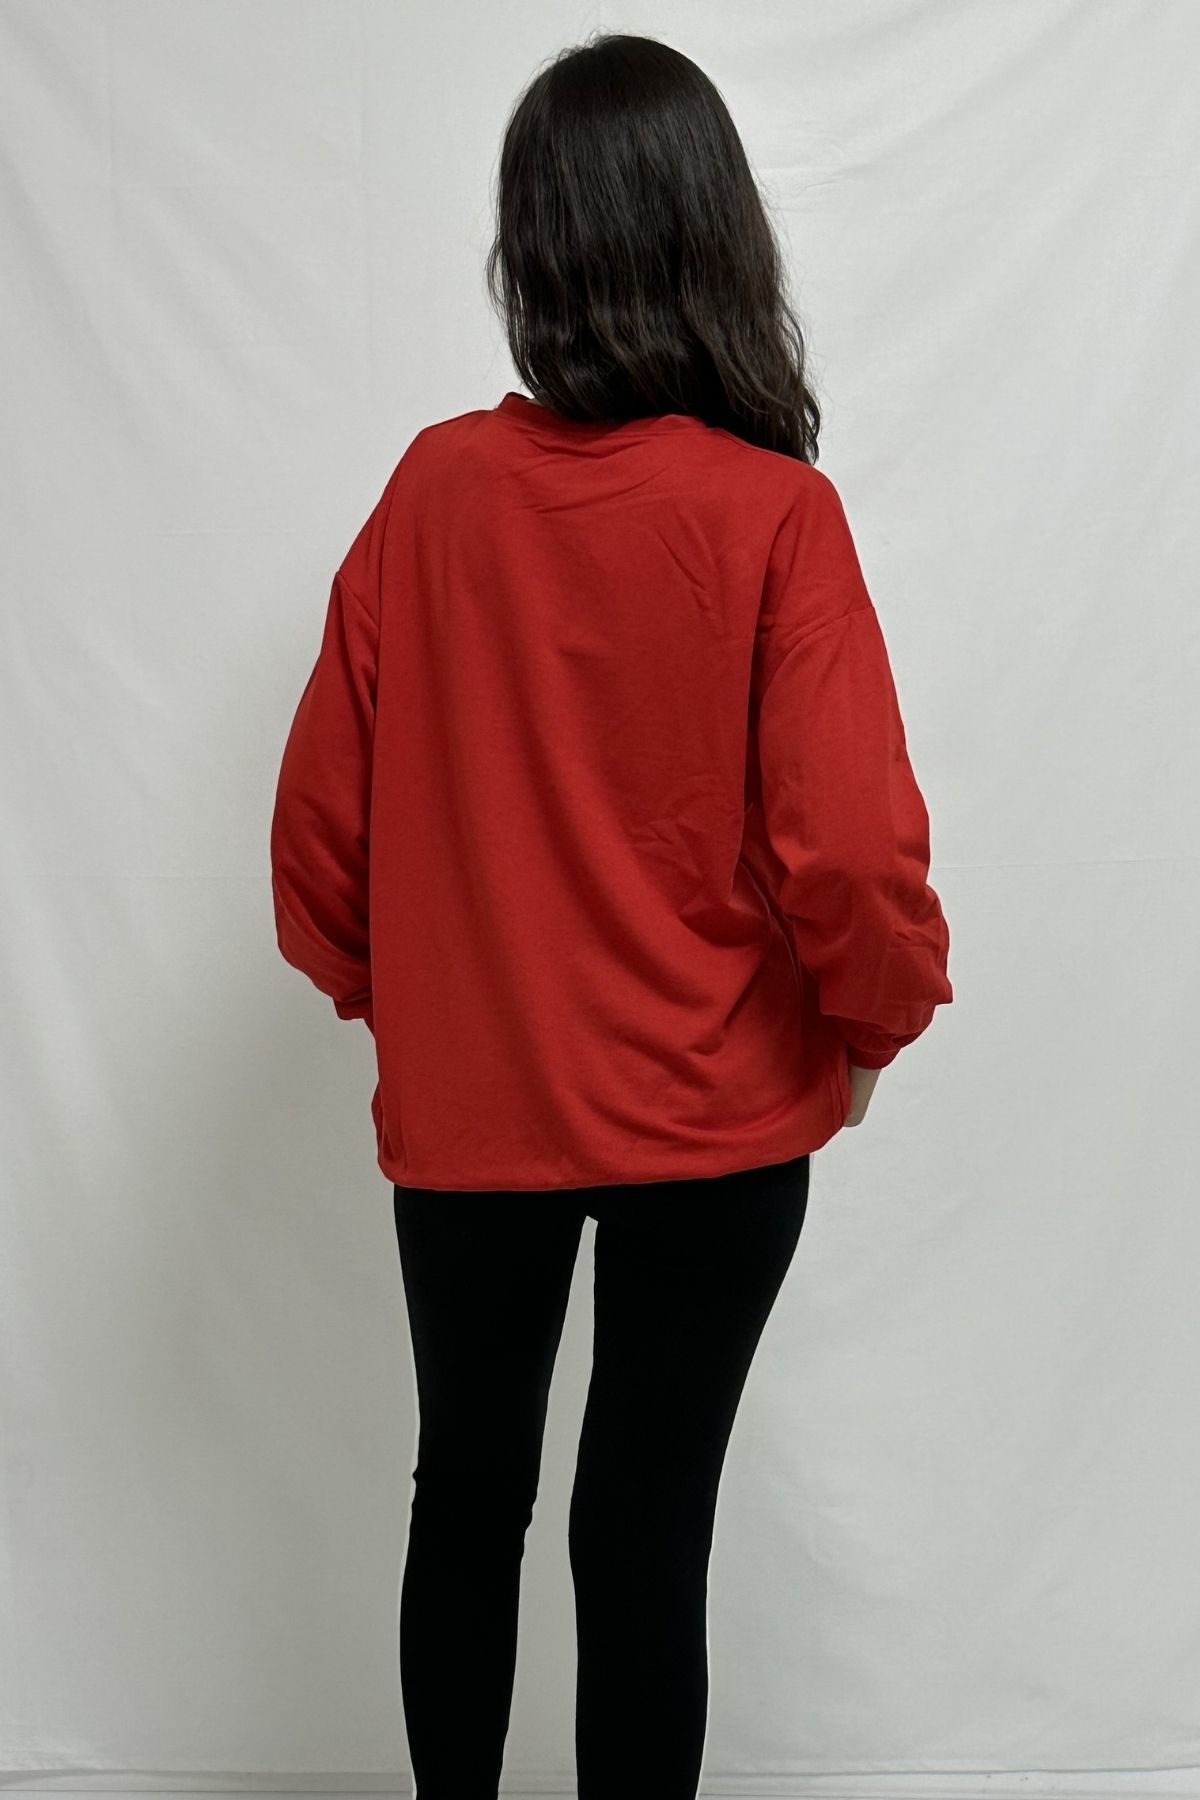 CLZ944 2 İplik Nakışlı Sweatshirt Kırmızı